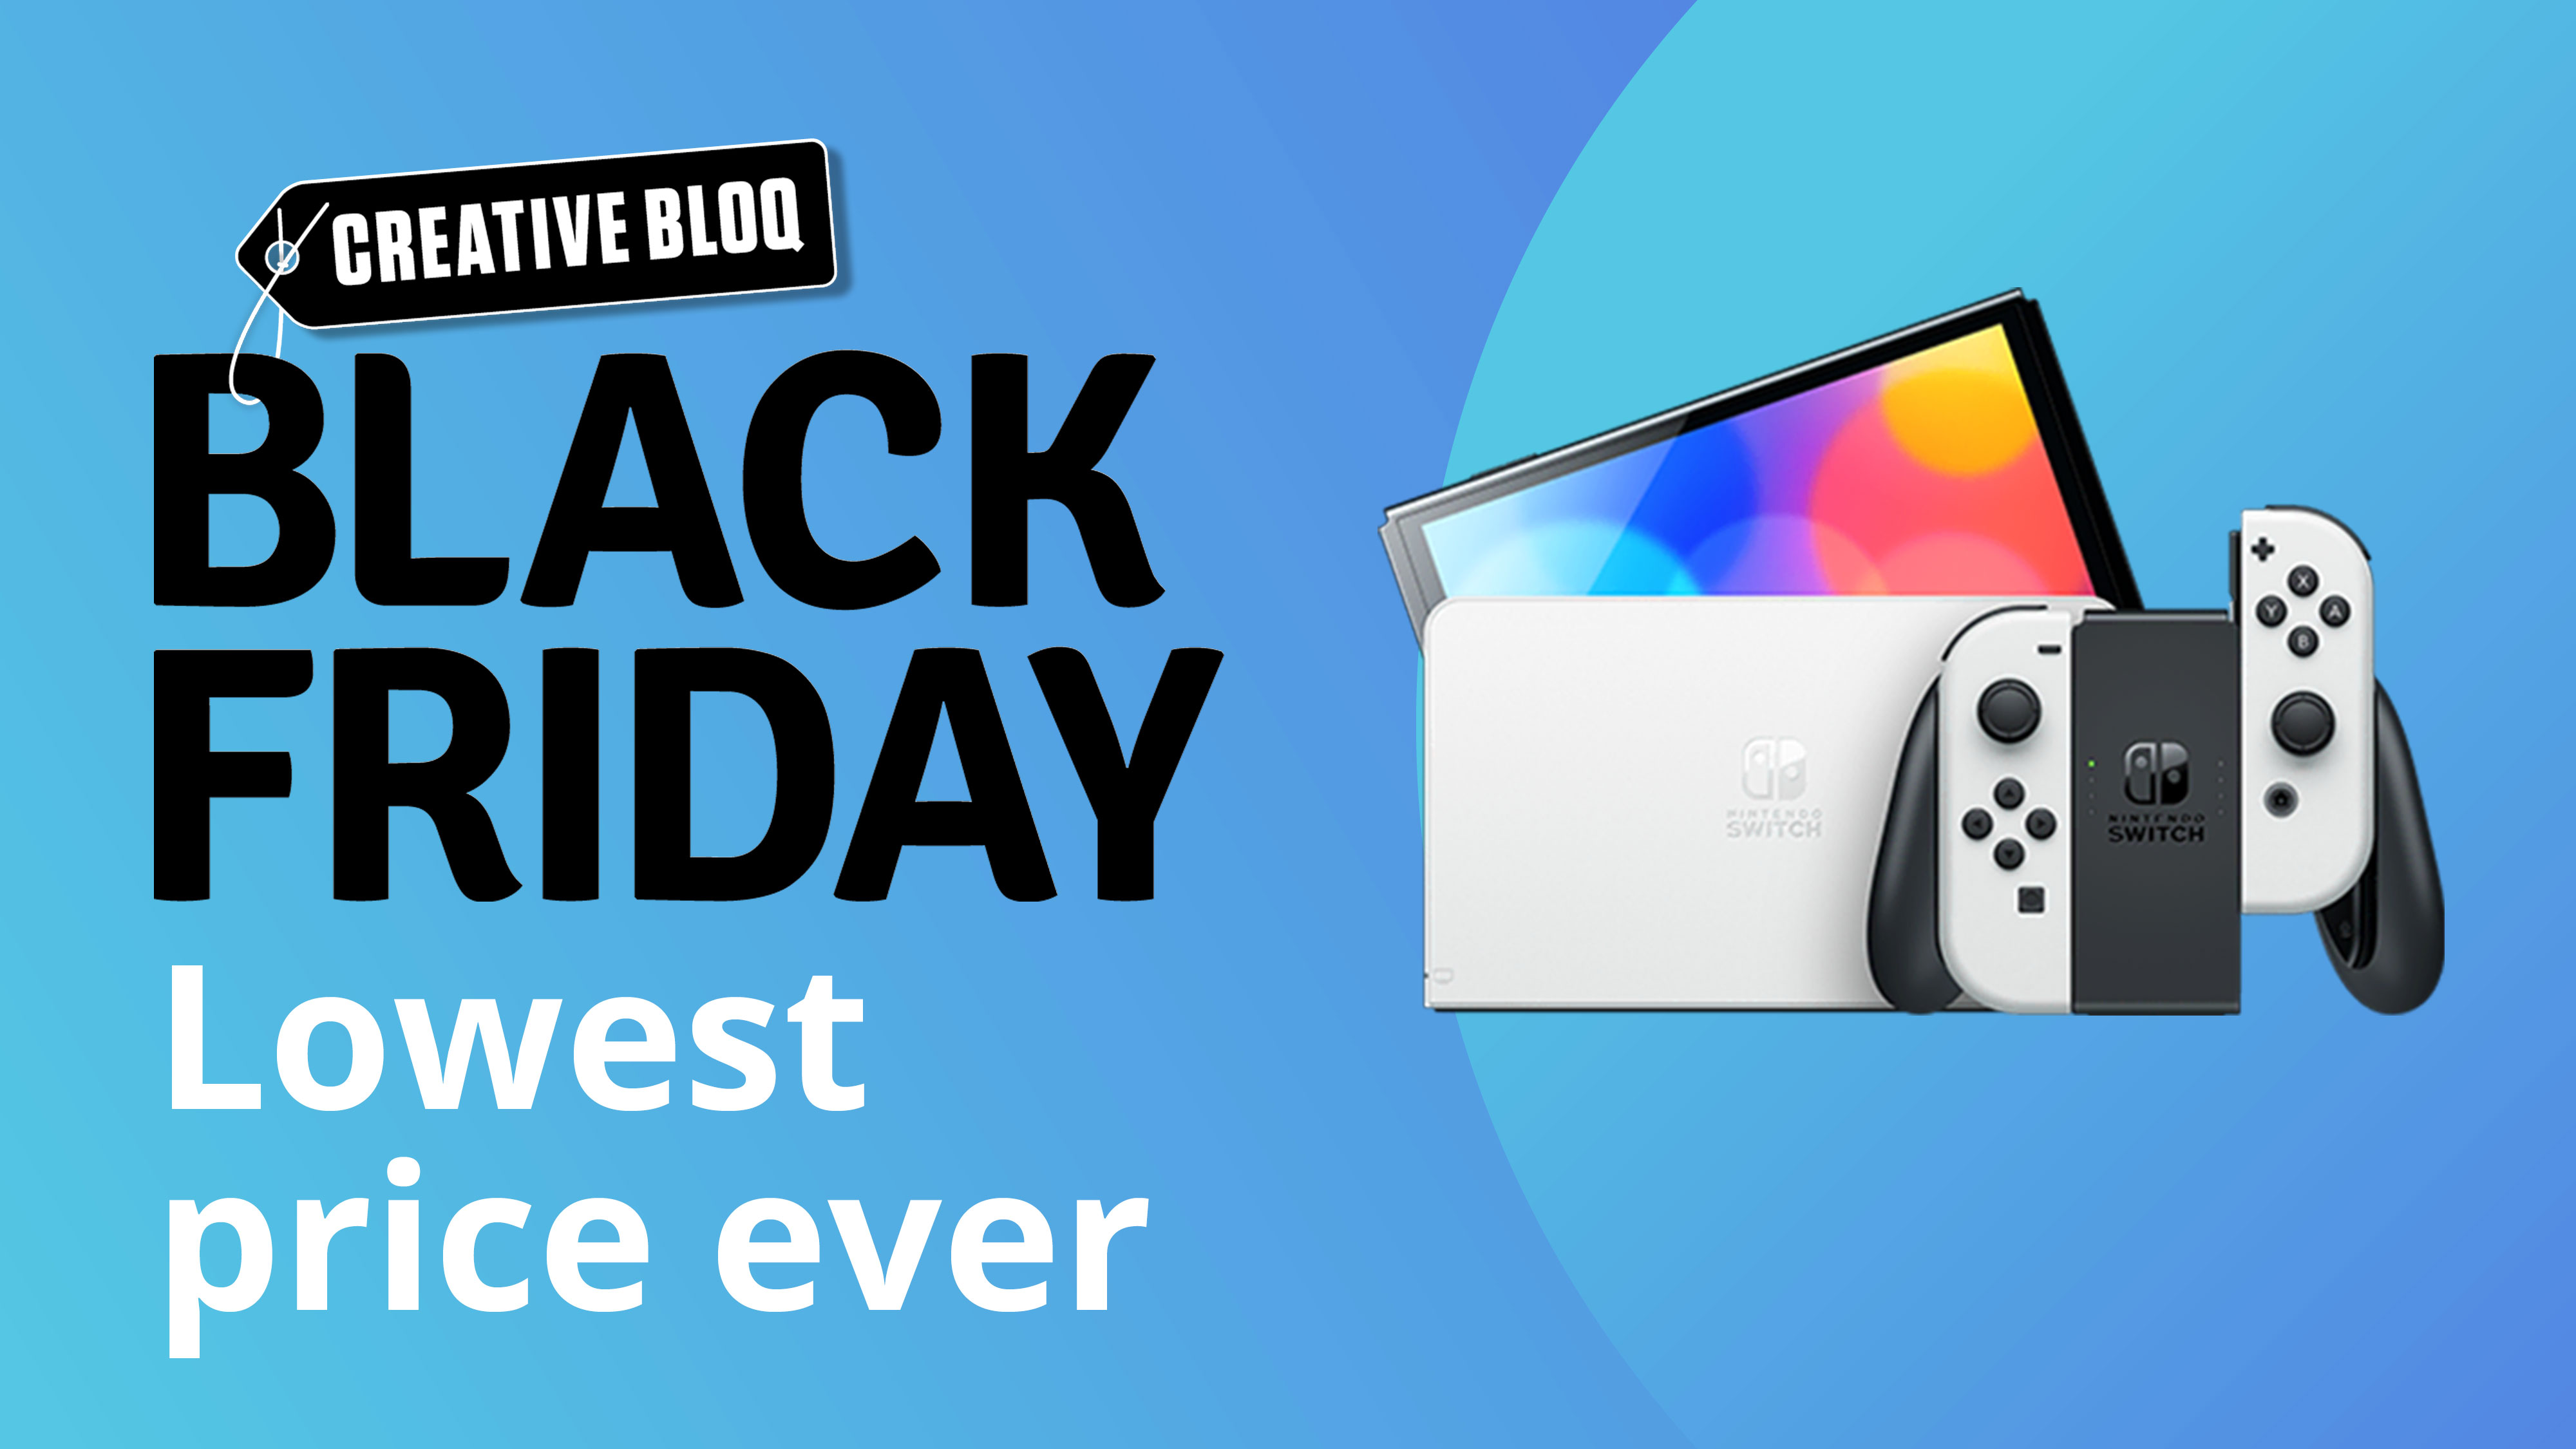 Best Nintendo Switch OLED Black Friday Deal